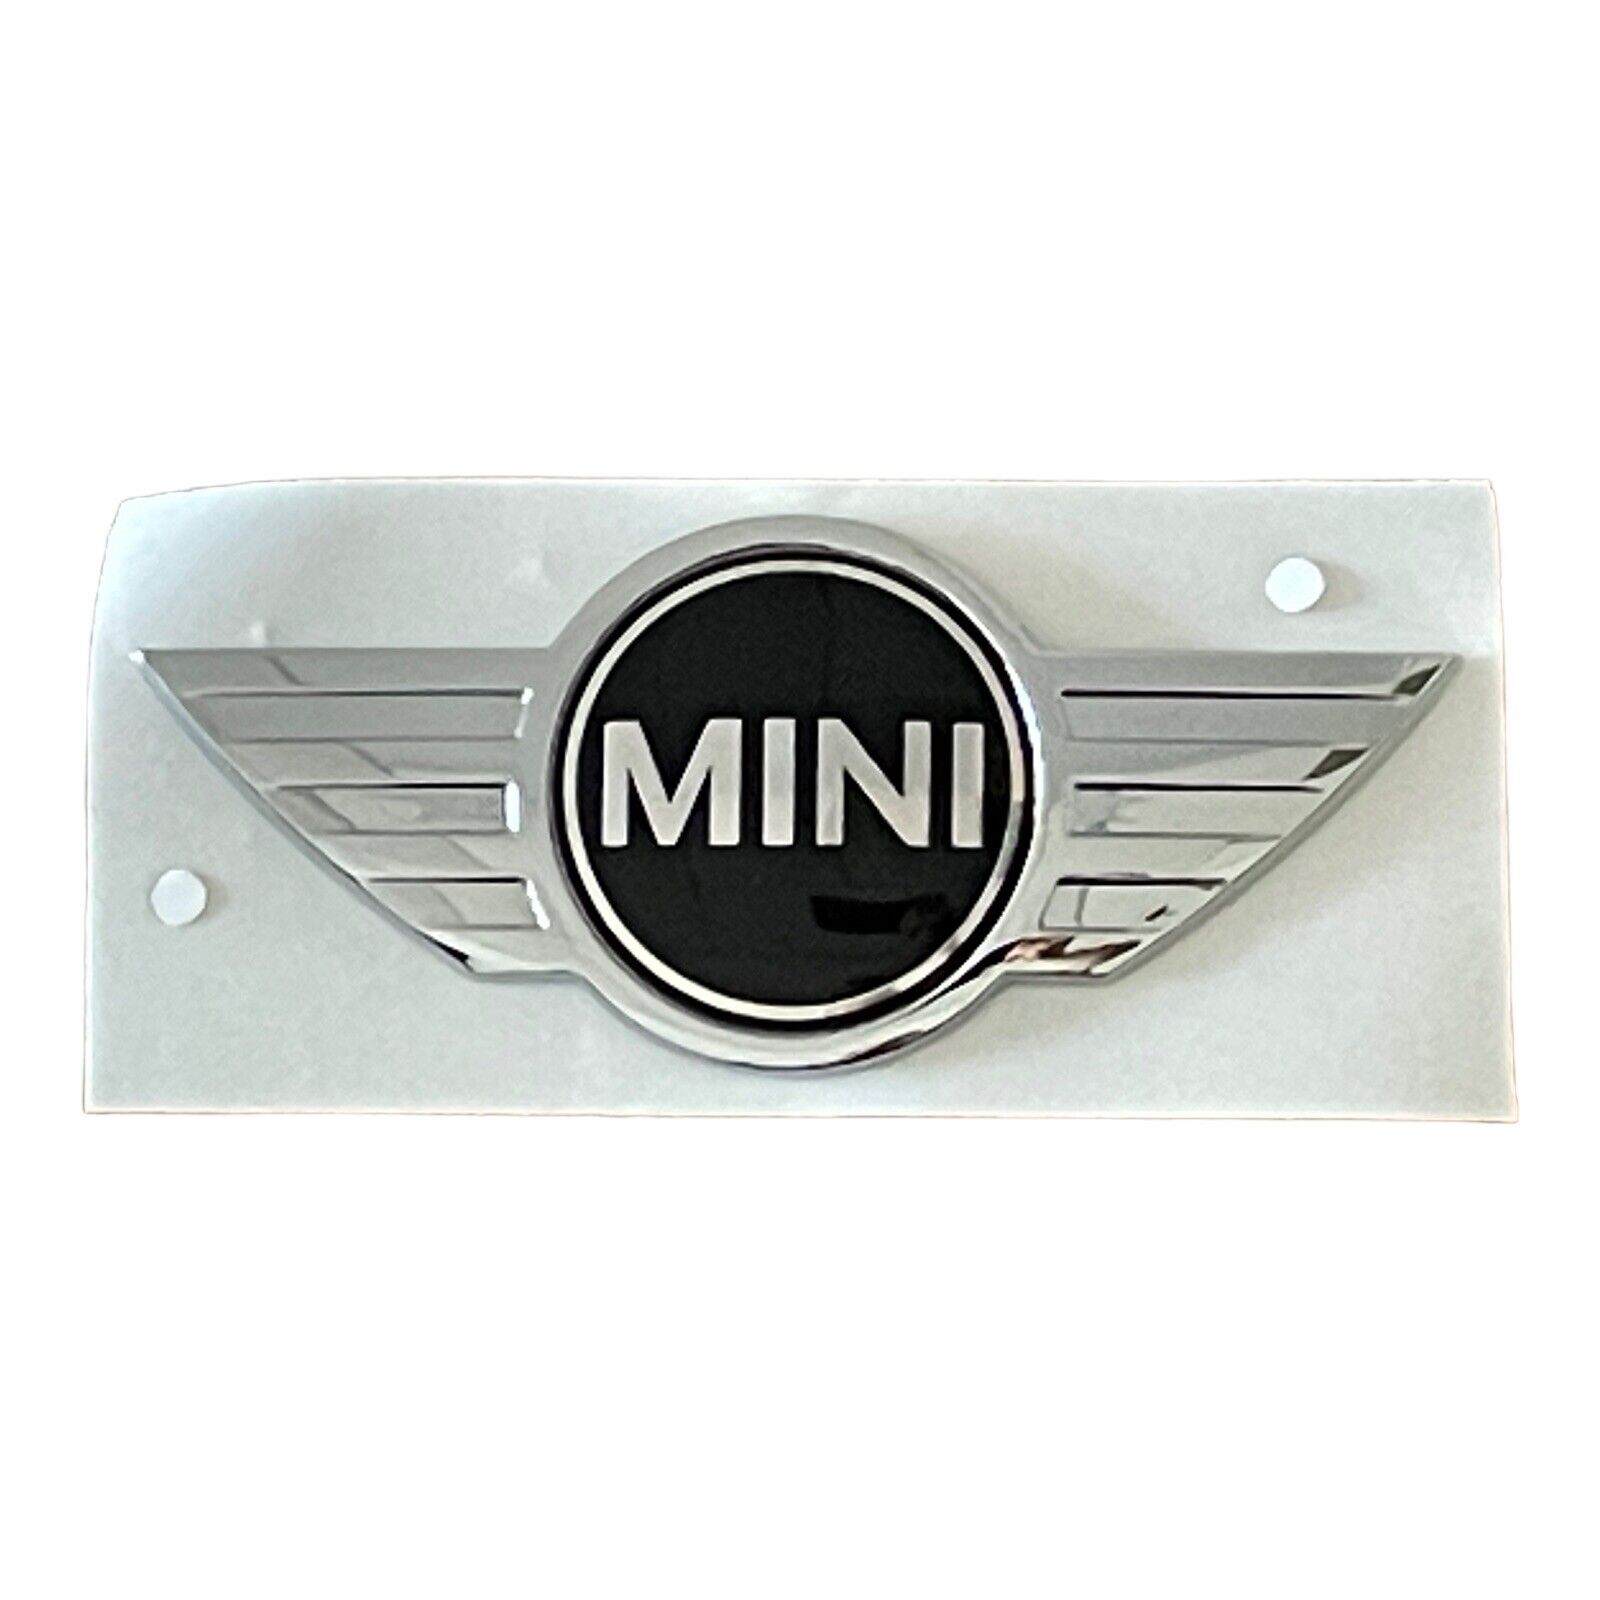 2007-2013 MINI Cooper S Front Hood Emblem Badge 51142754973 R55 R56 R57 New OEM